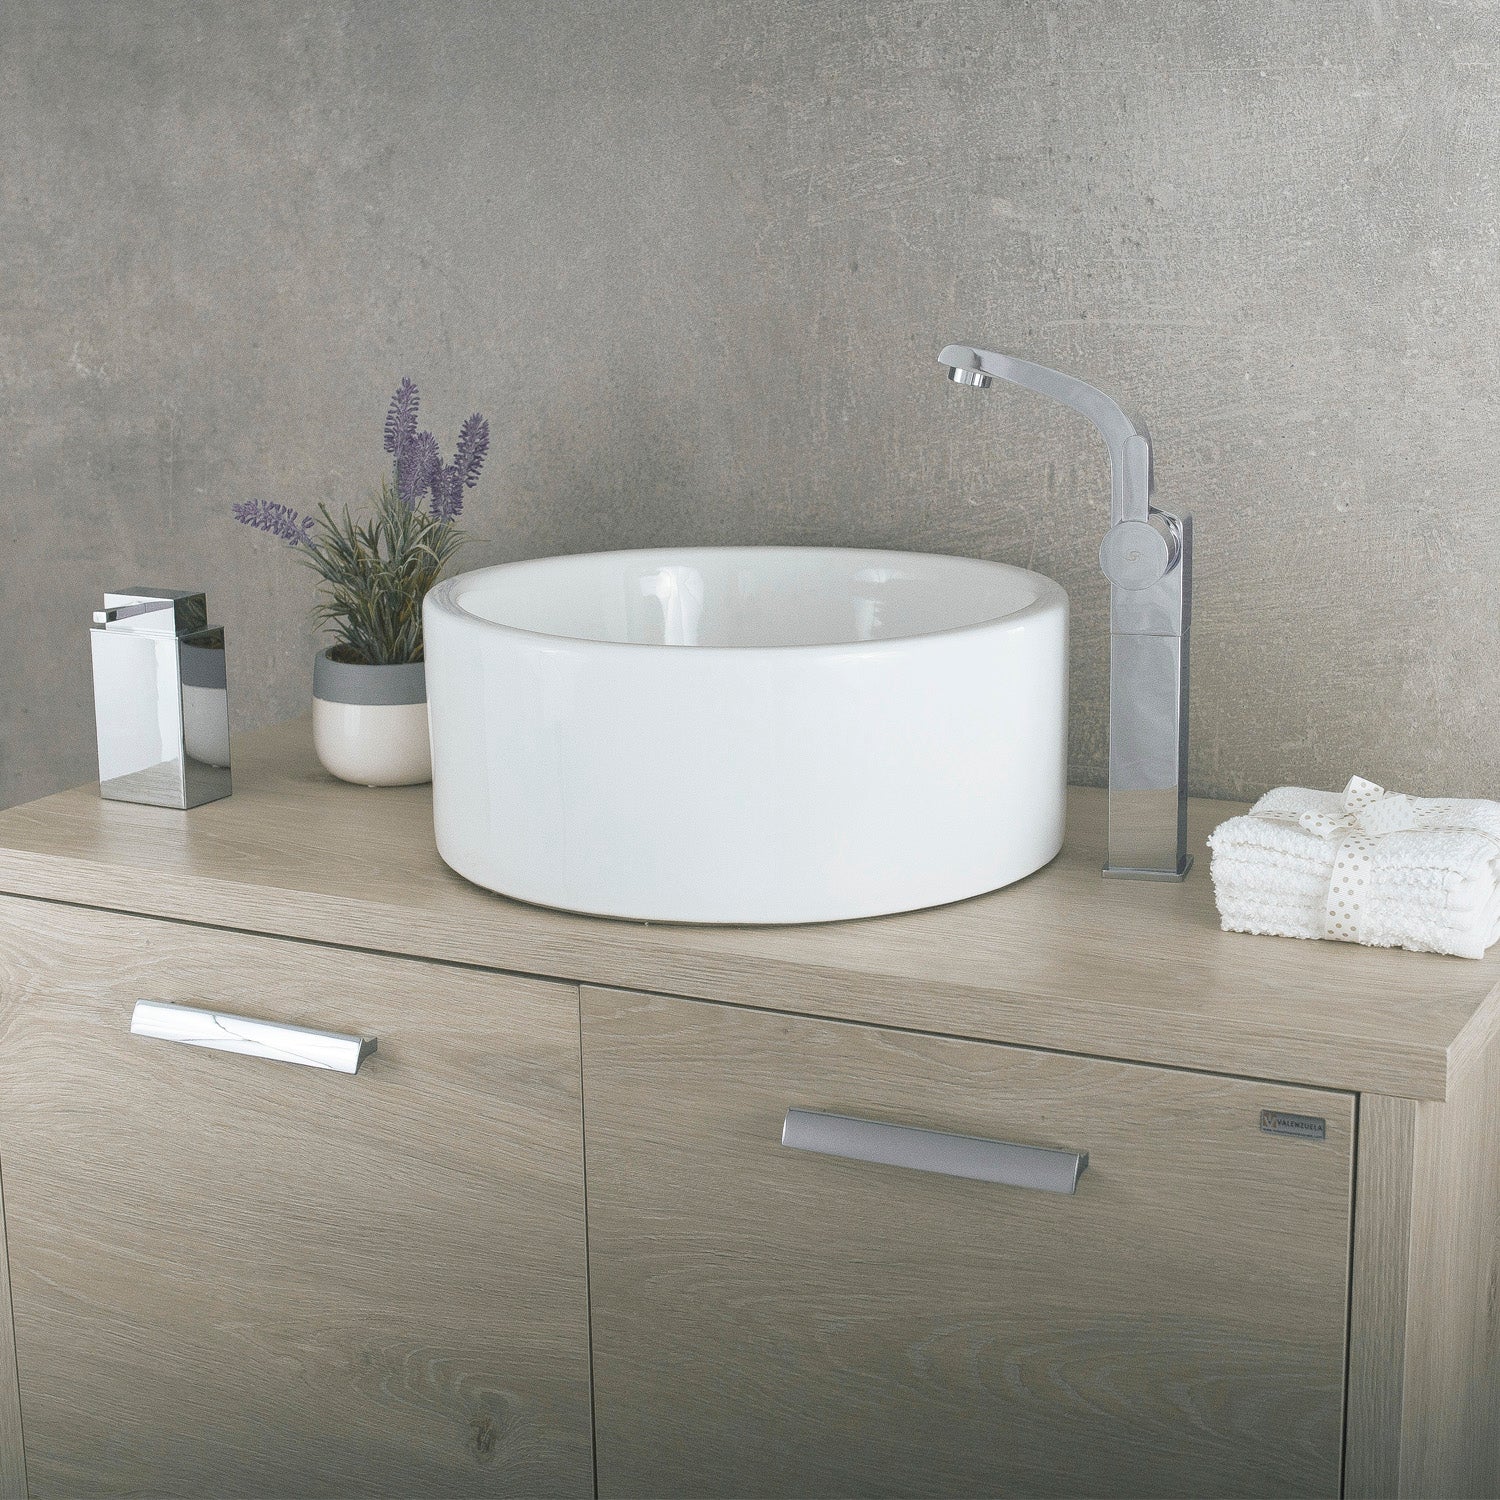 DAX Single Handle Vessel Sink Bathroom Faucet, Brass Body, Chrome Finish, 4-3/4 x 12-1/8 Inches (DAX-8220B-CR)